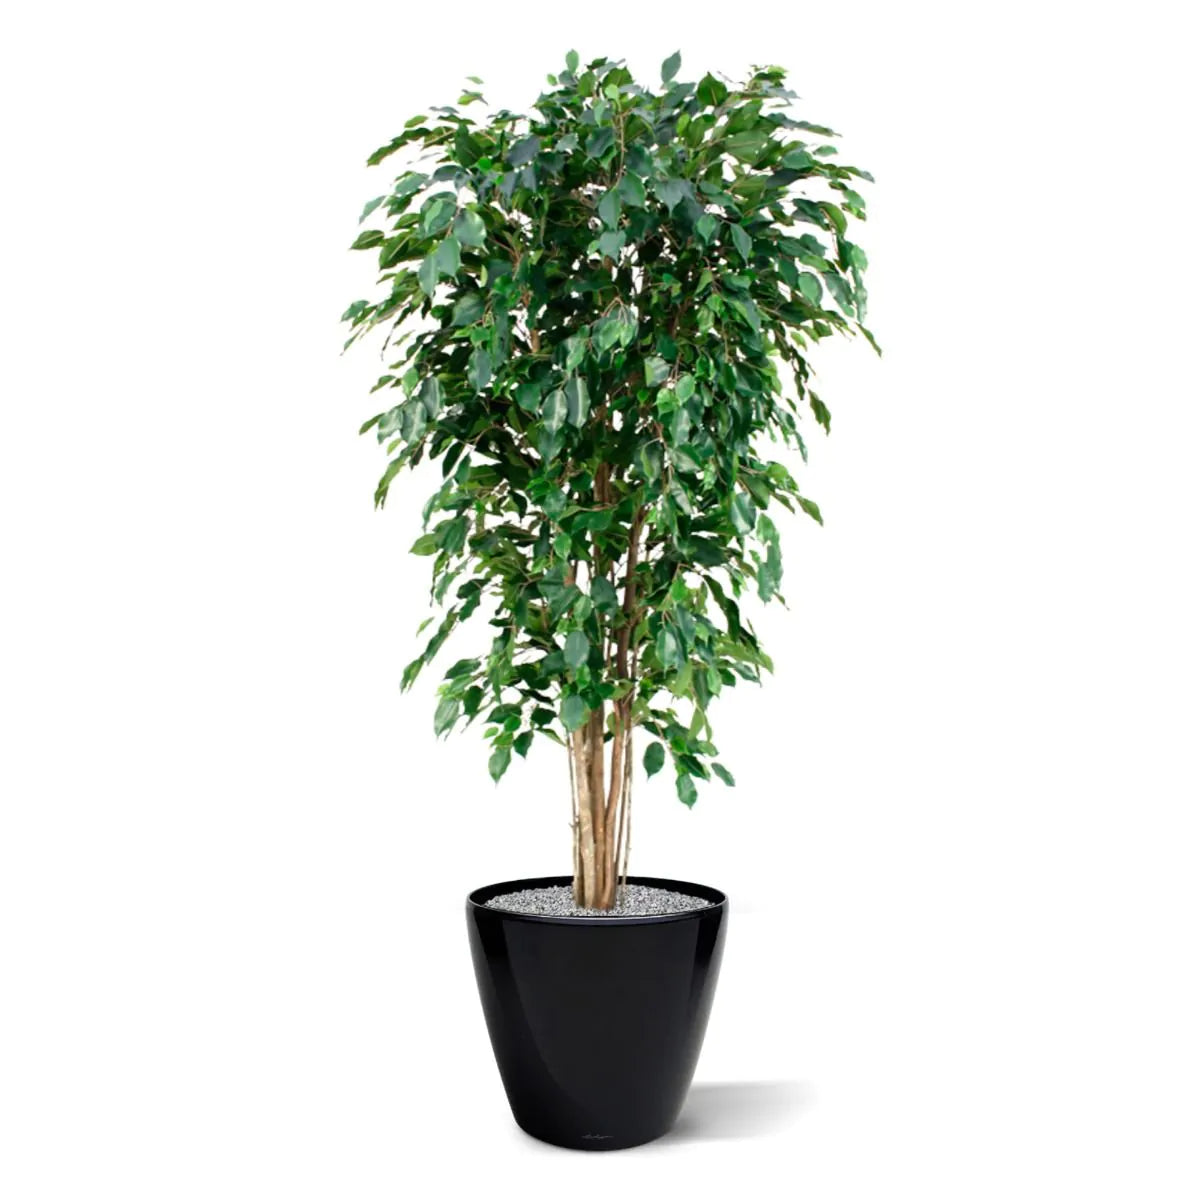 Pflanzenglanz® Ficus Kunstpflanze Exotica Deluxe 180 cm grün Kunstbaum